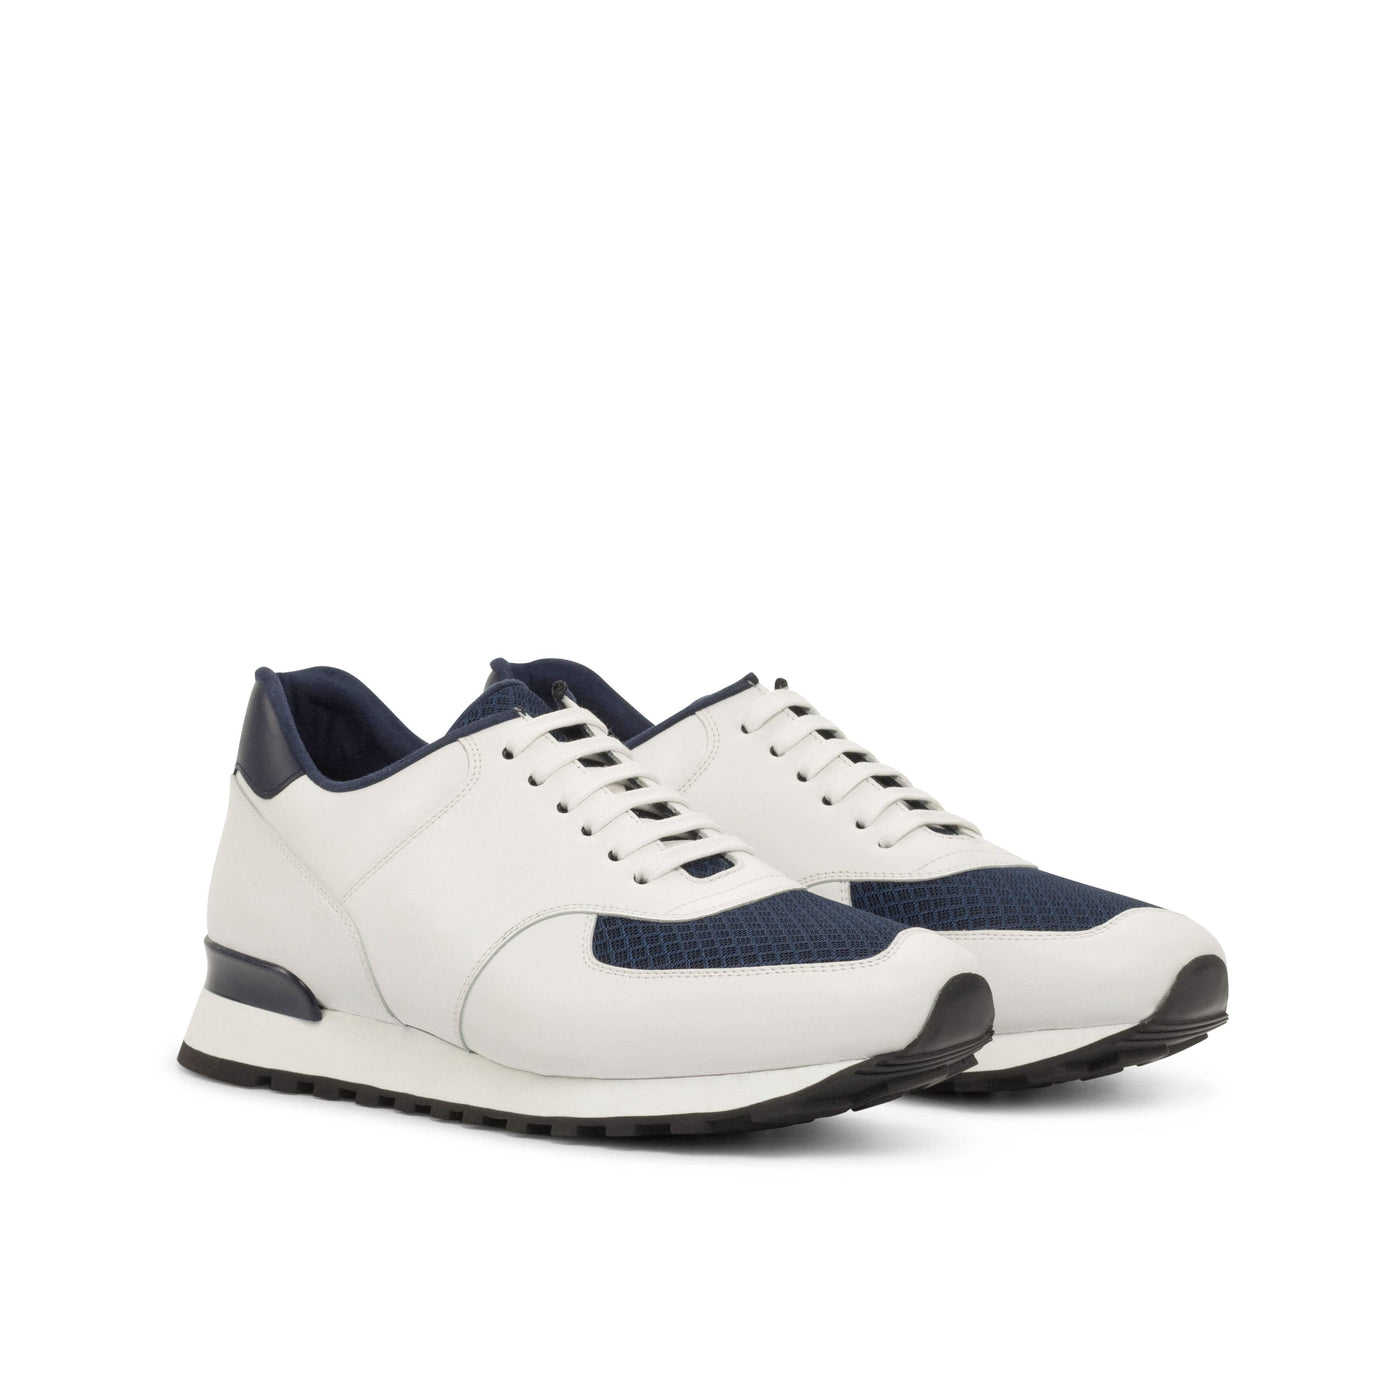 Men's Jogger Sneakers Leather Blue White 4903 3- MERRIMIUM